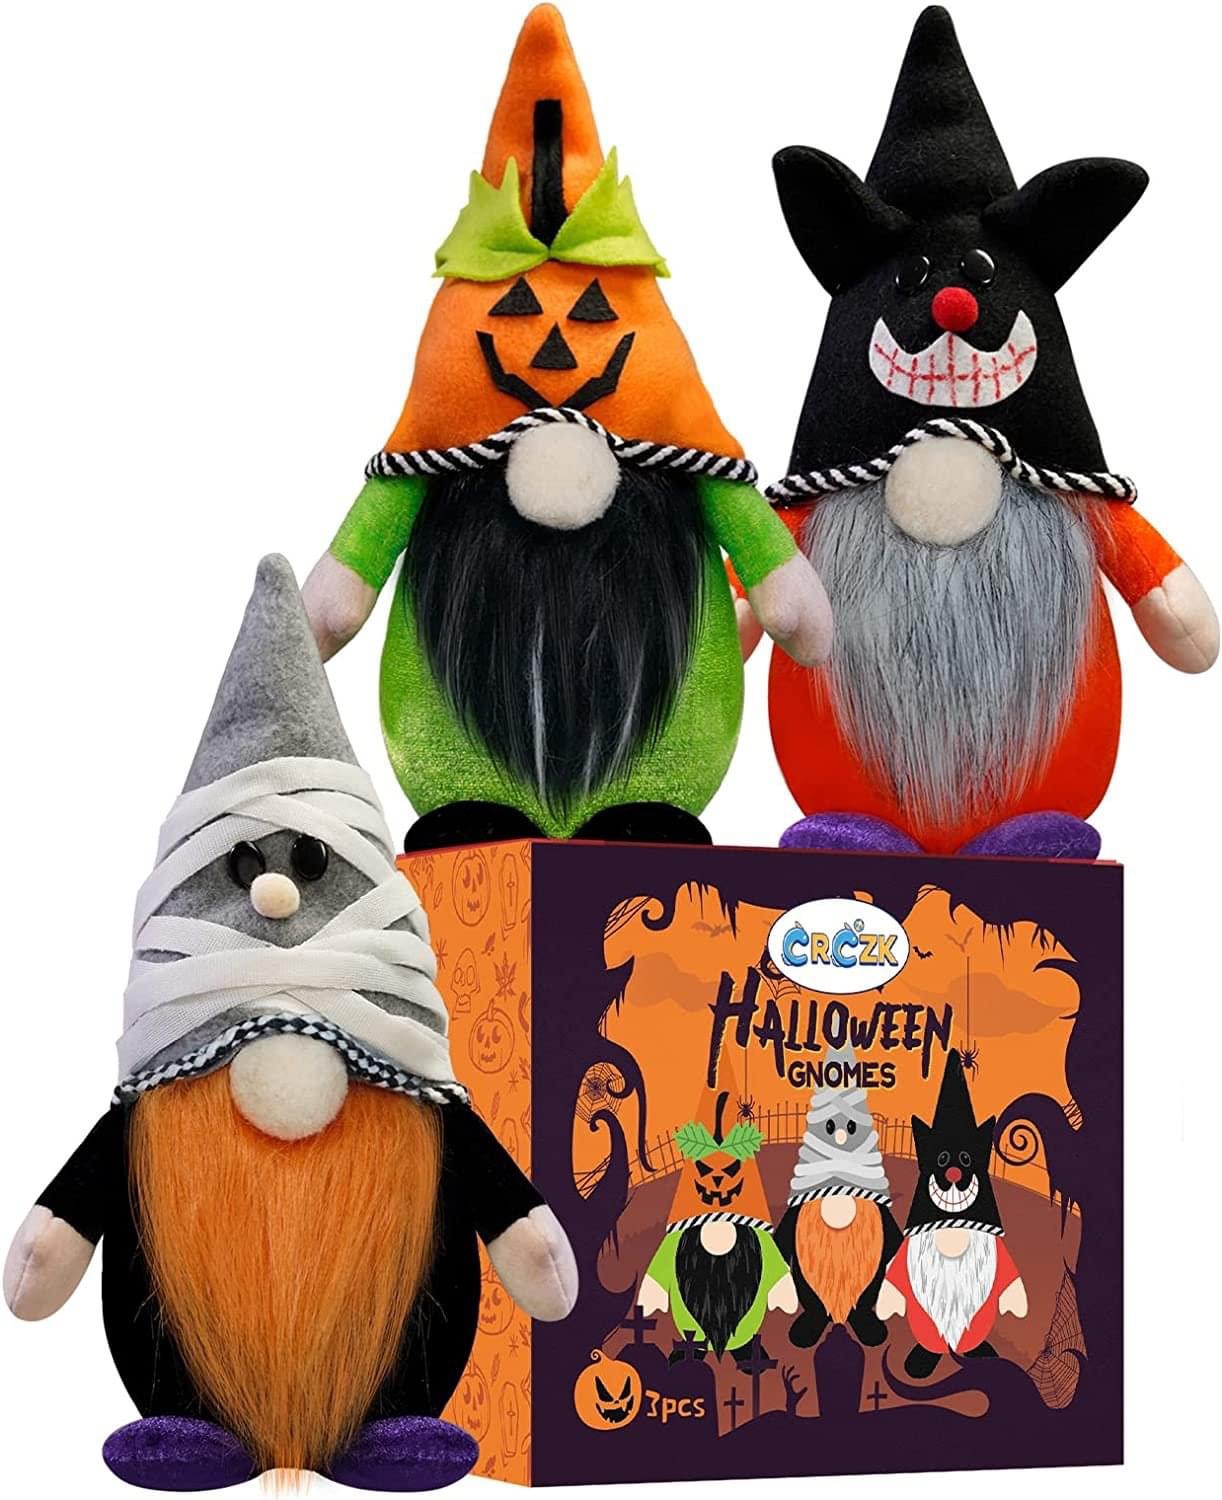 Halloween gnomes – Raining Deals